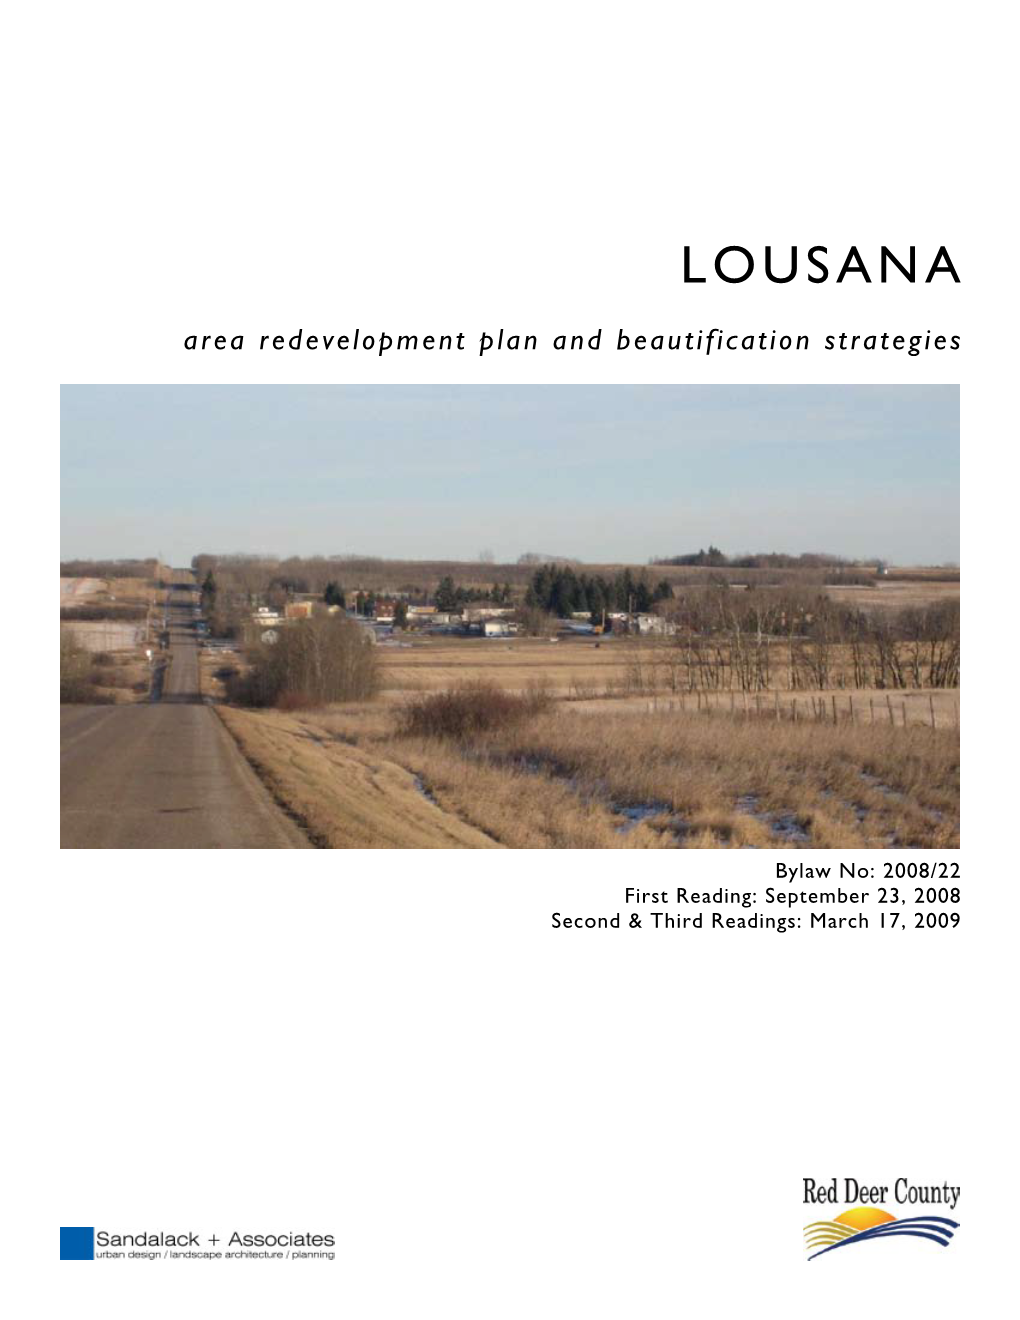 LOUSANA Area Redevelopment Plan and Beautification Strategies